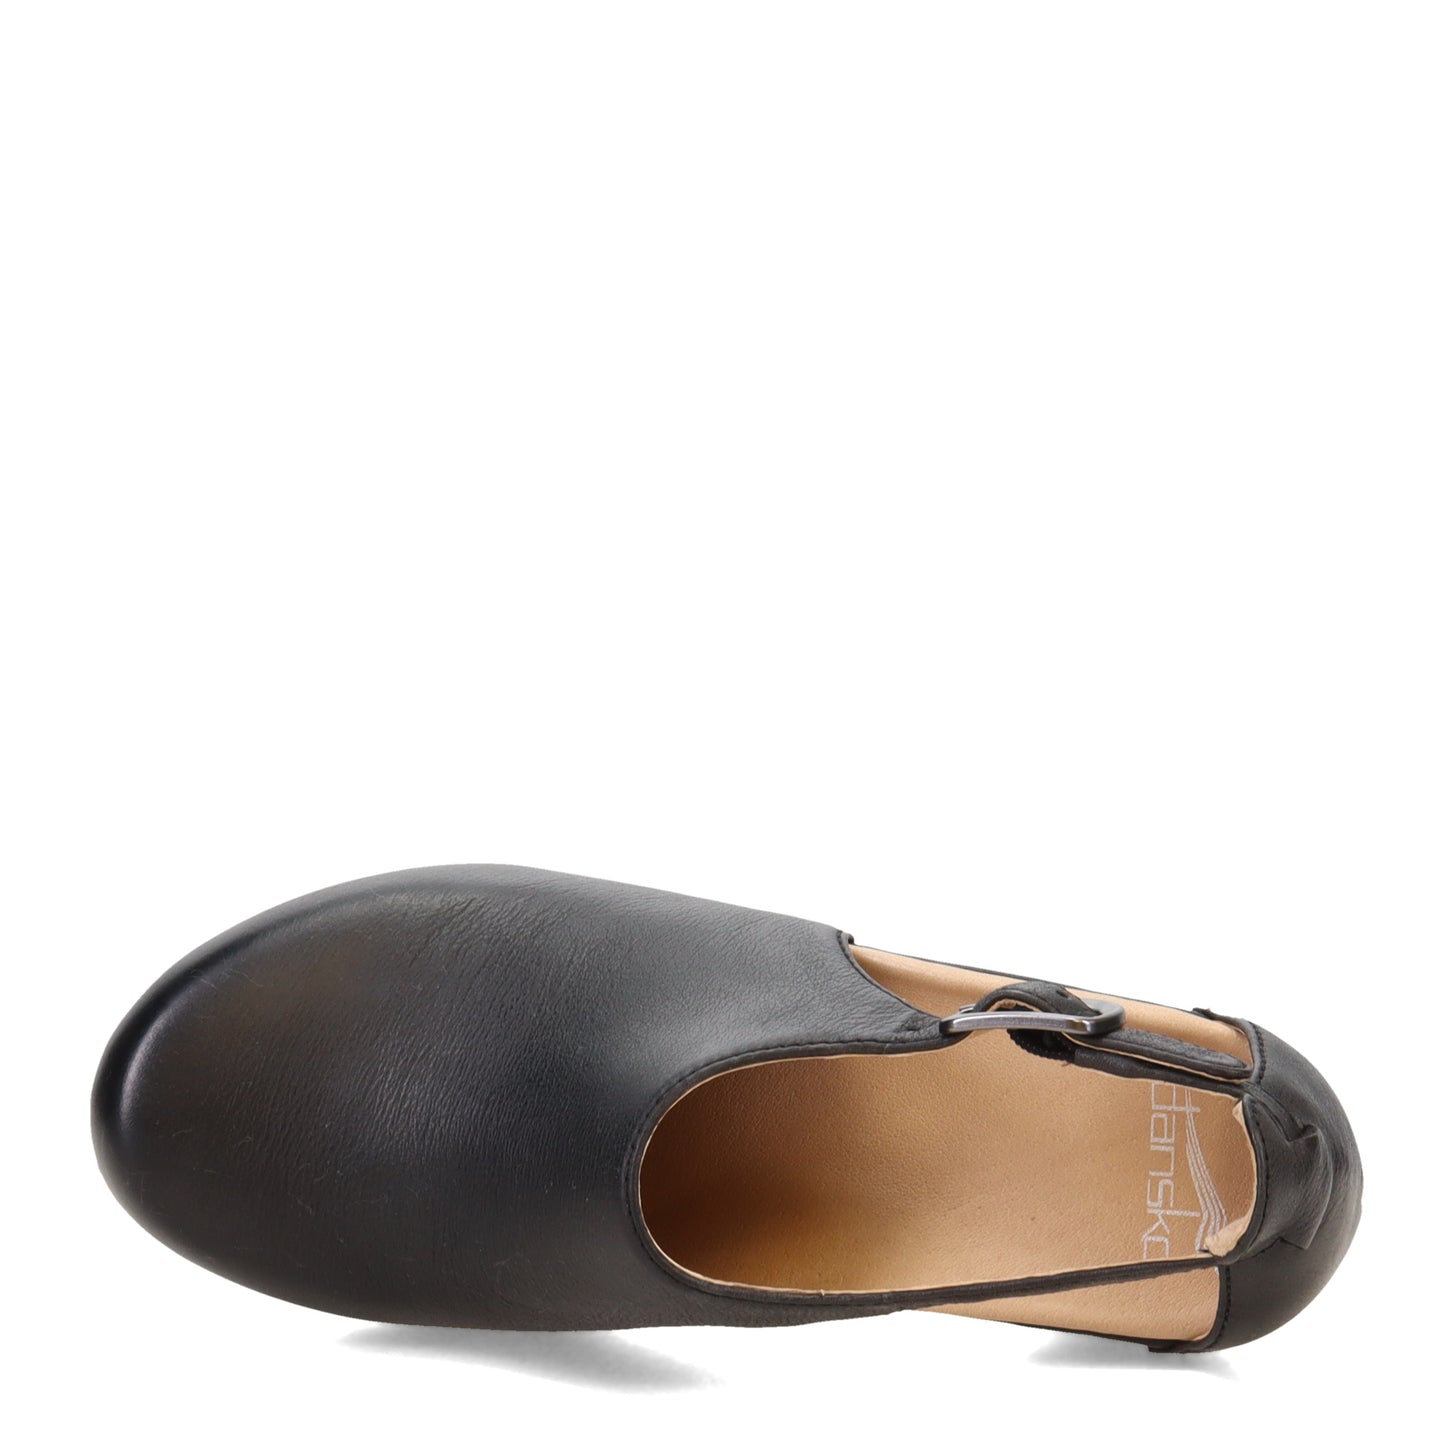 Peltz Shoes  Women's Dansko Sassy Clog Black 1831-029400